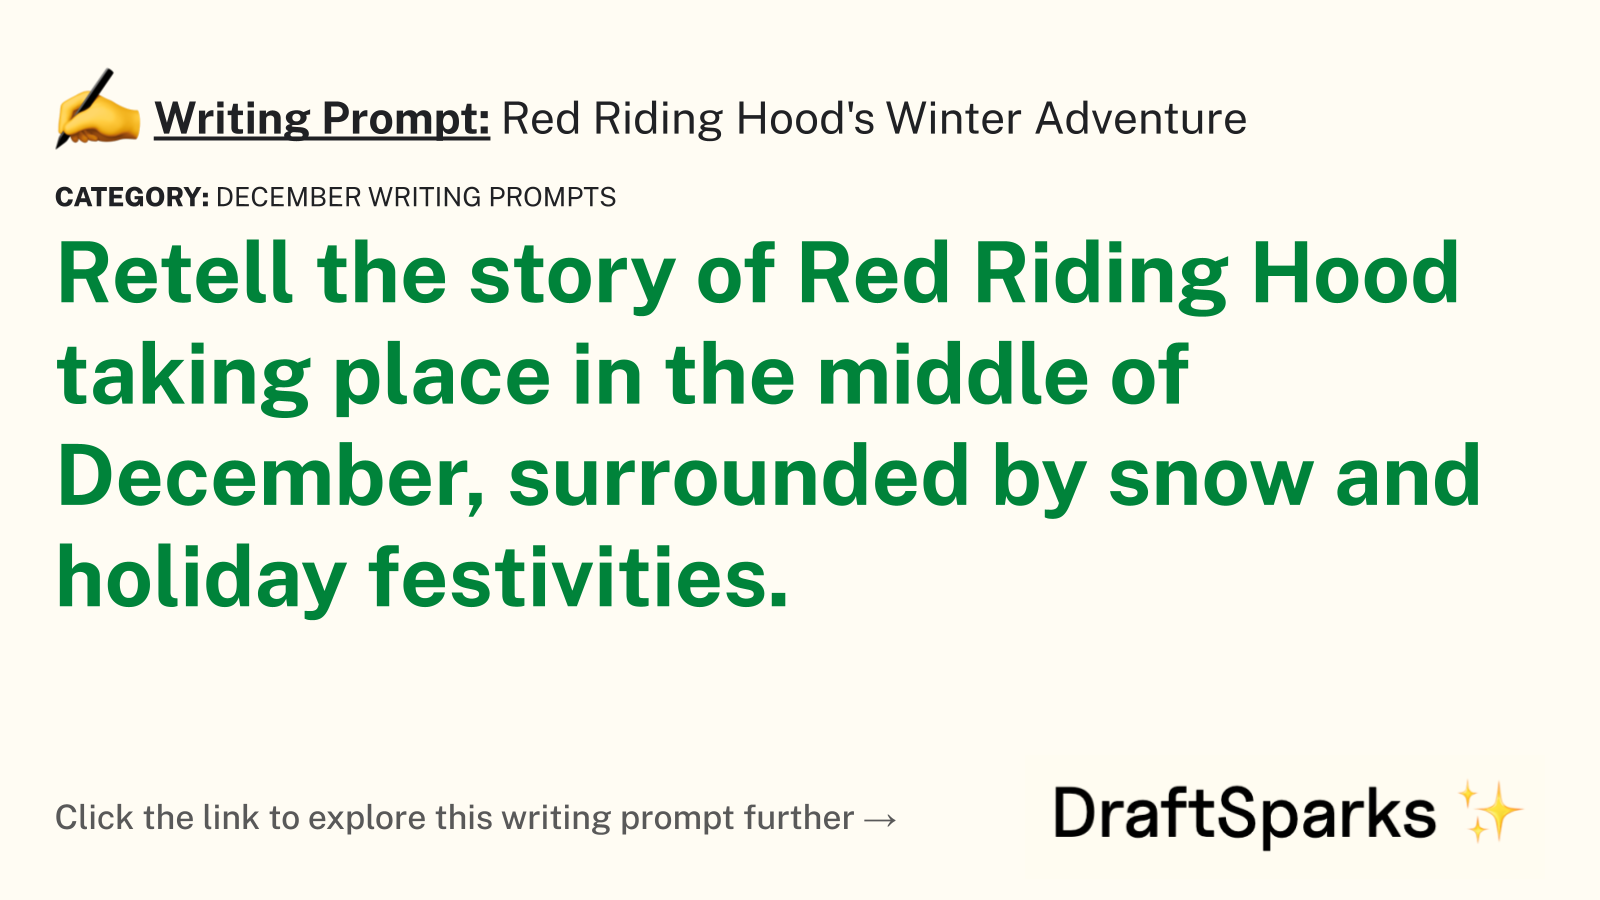 Red Riding Hood’s Winter Adventure